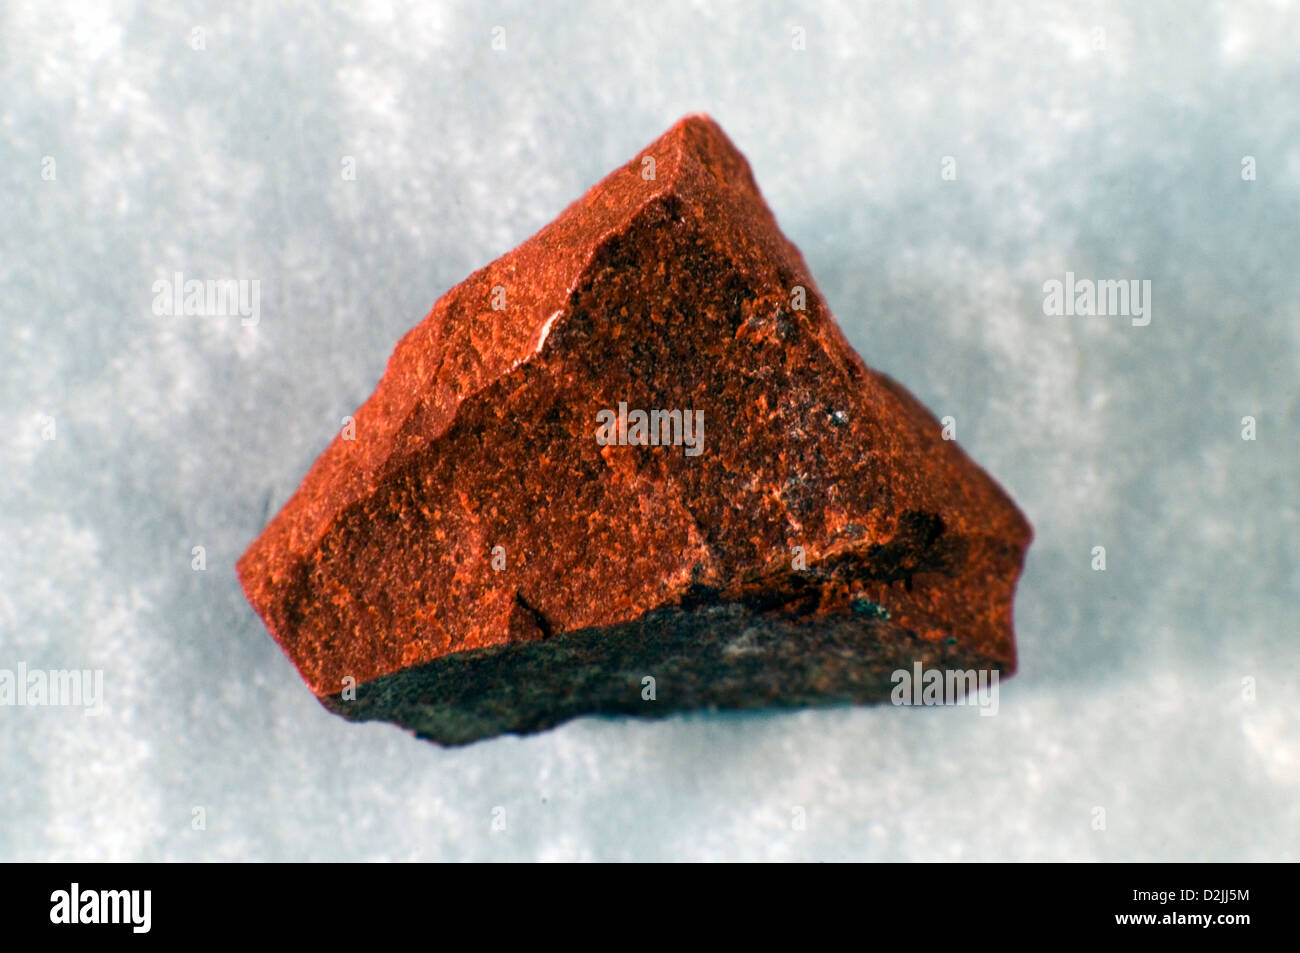 Red stone, unusual stone stock photo. Image of stone - 138095574